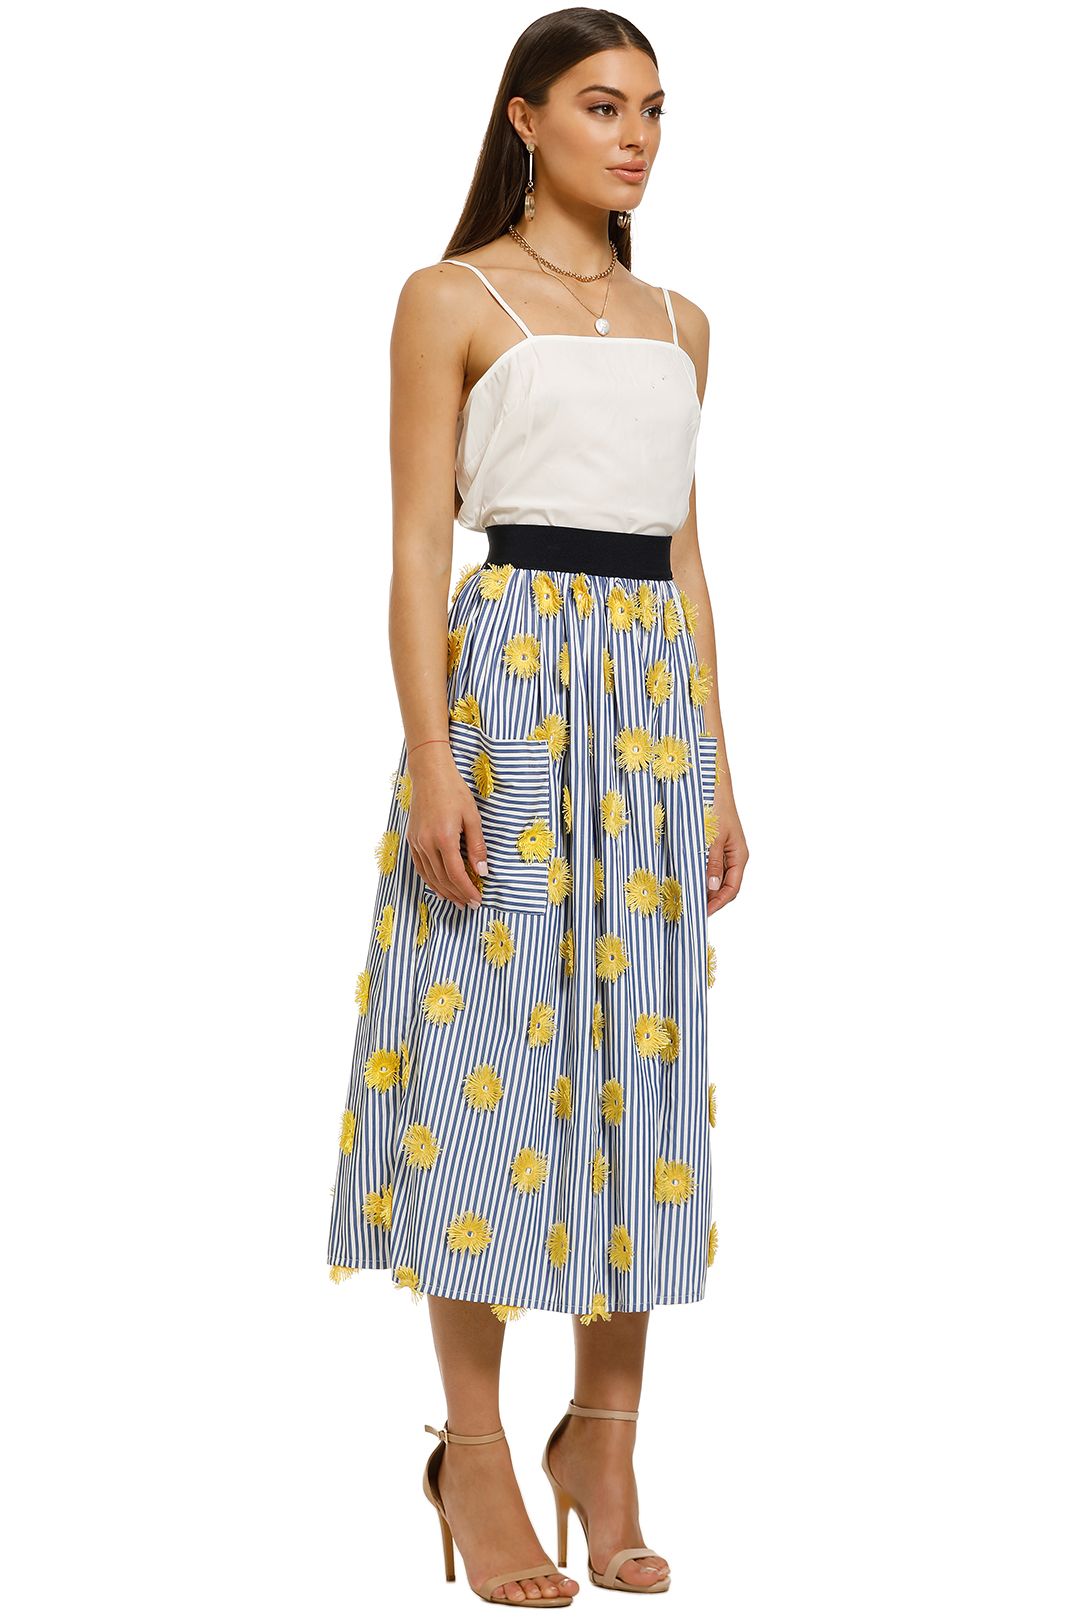 Curate-by-Trelise-Cooper-Full-Sun-Skirt-Stripes-Side